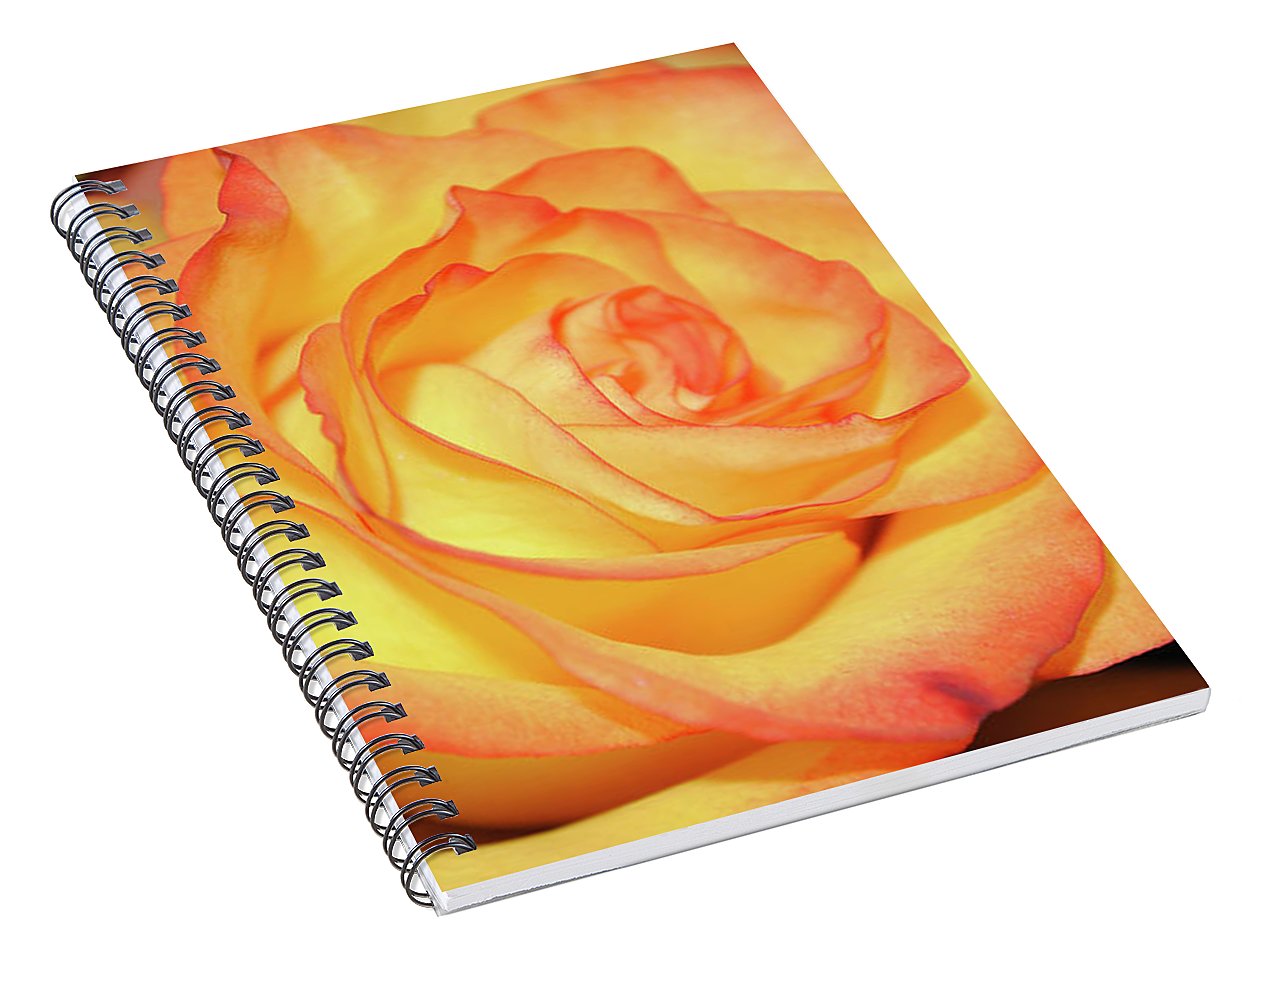 Raw Flowers 5 - Spiral Notebook